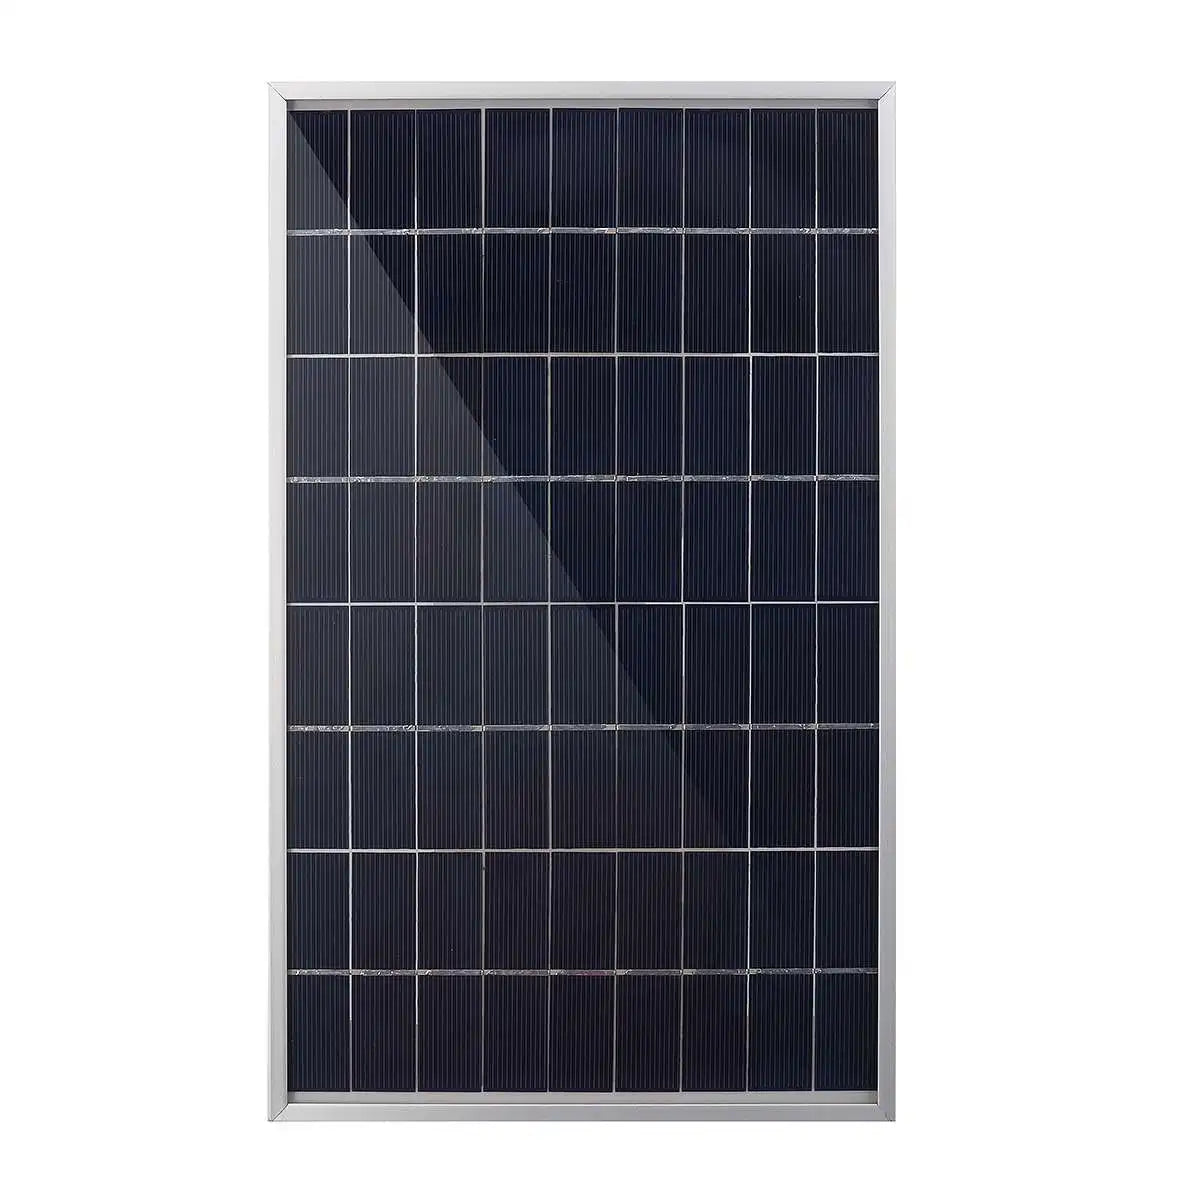 300W Solar Panel, Solar Panel Kit: 12V Power & USB Charging for Outdoor Use.